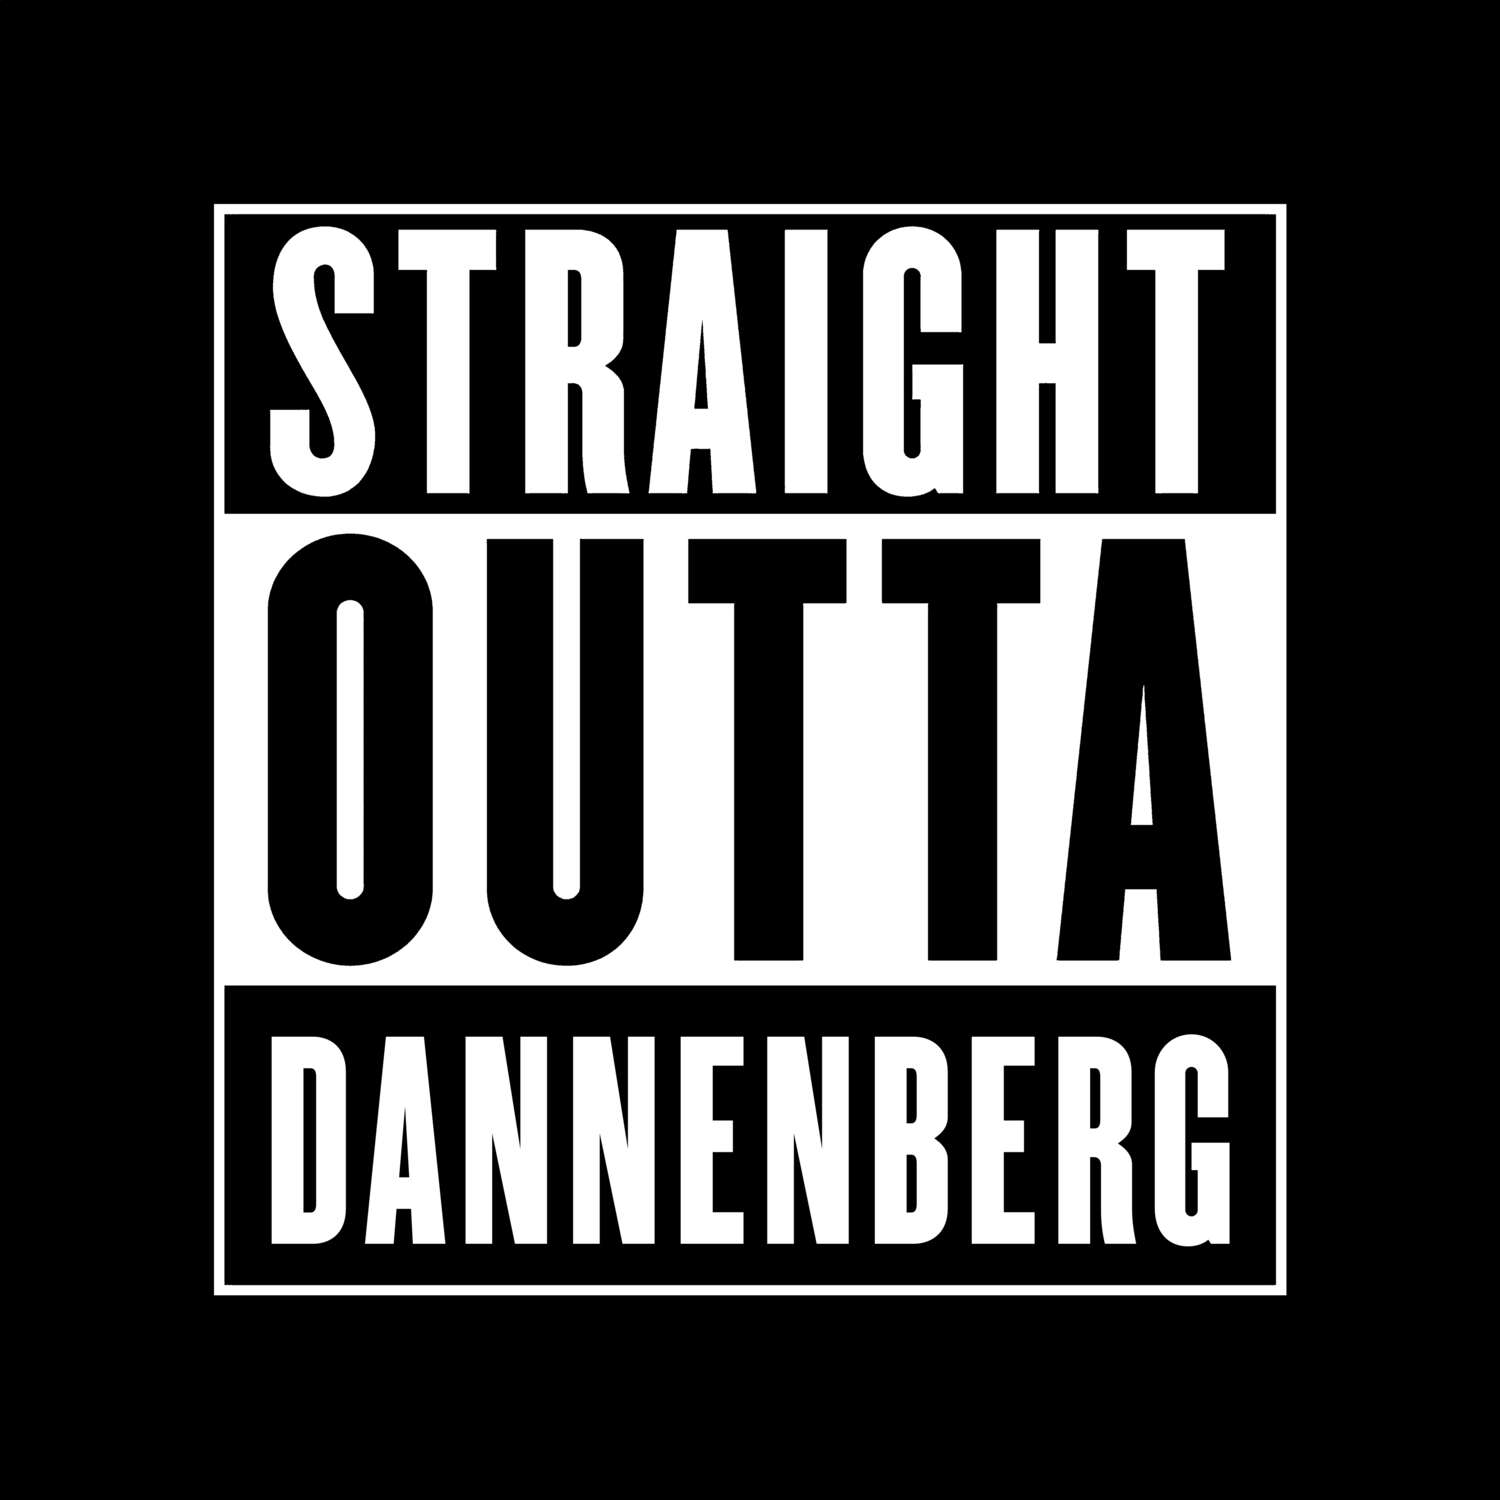 Dannenberg T-Shirt »Straight Outta«